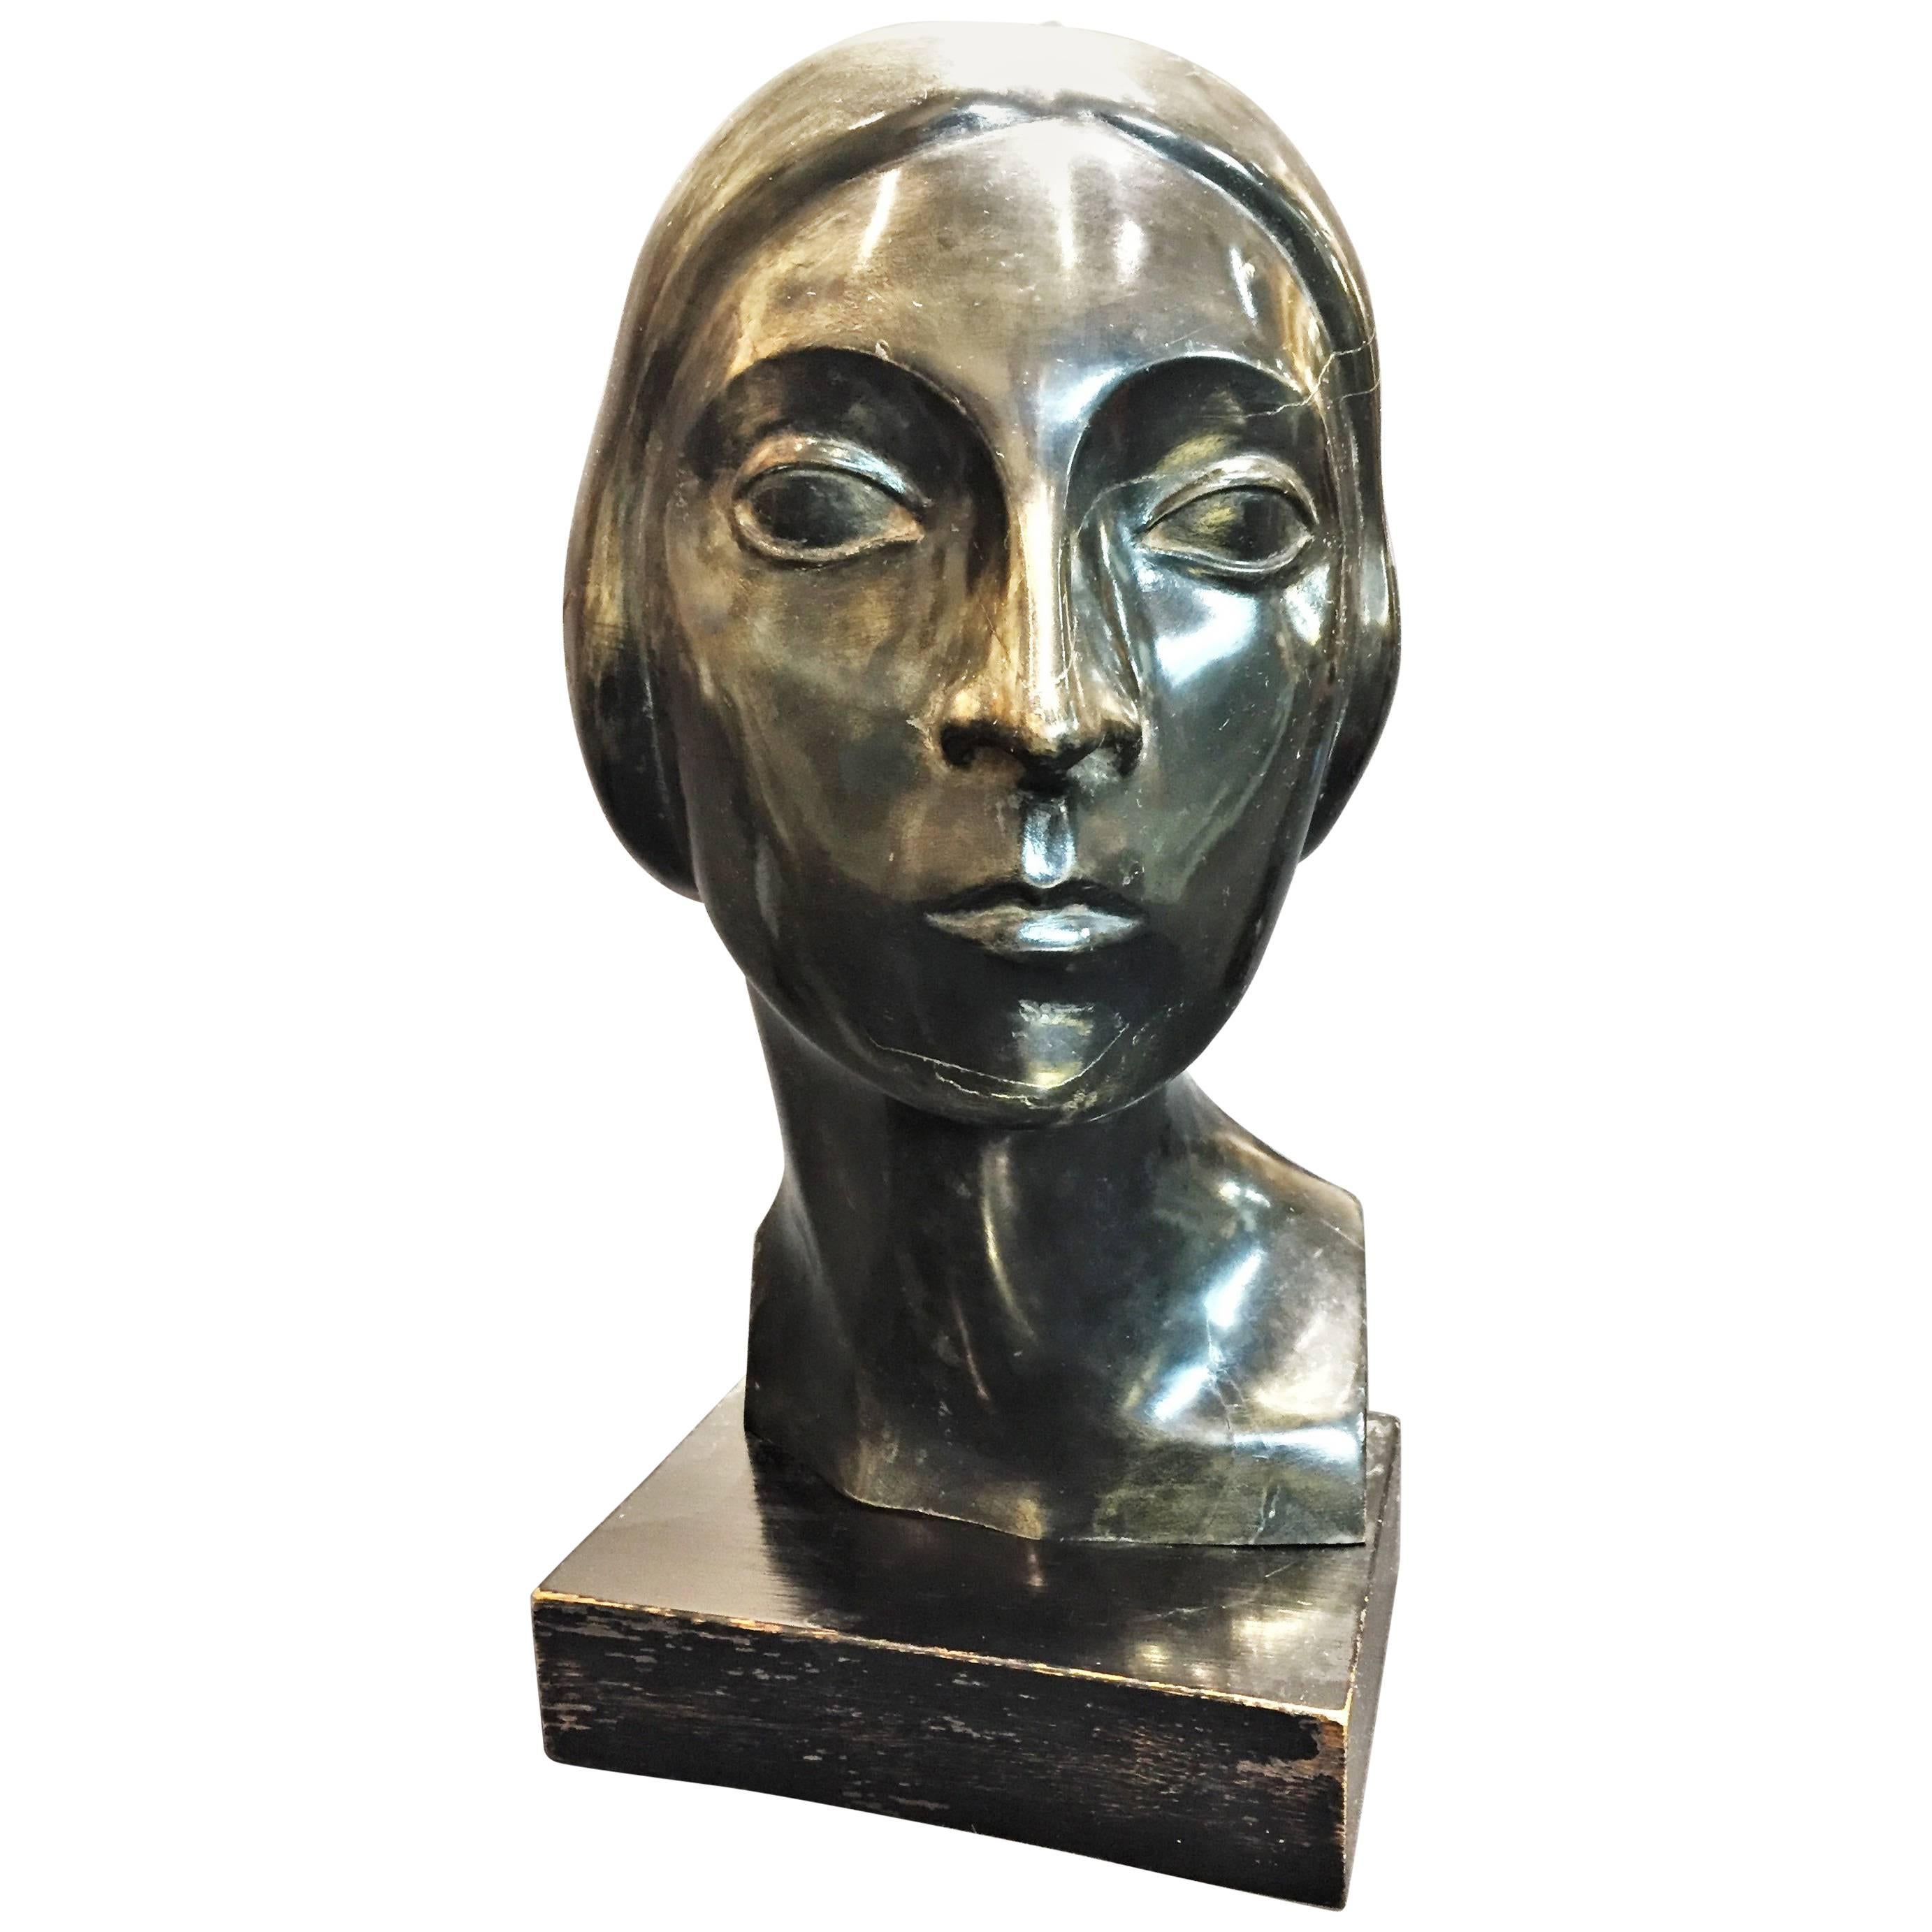 Eugene Kormendi-Frim, Kopf, handgeschnitzte Skulptur aus ebonisiertem Holz, um 1930